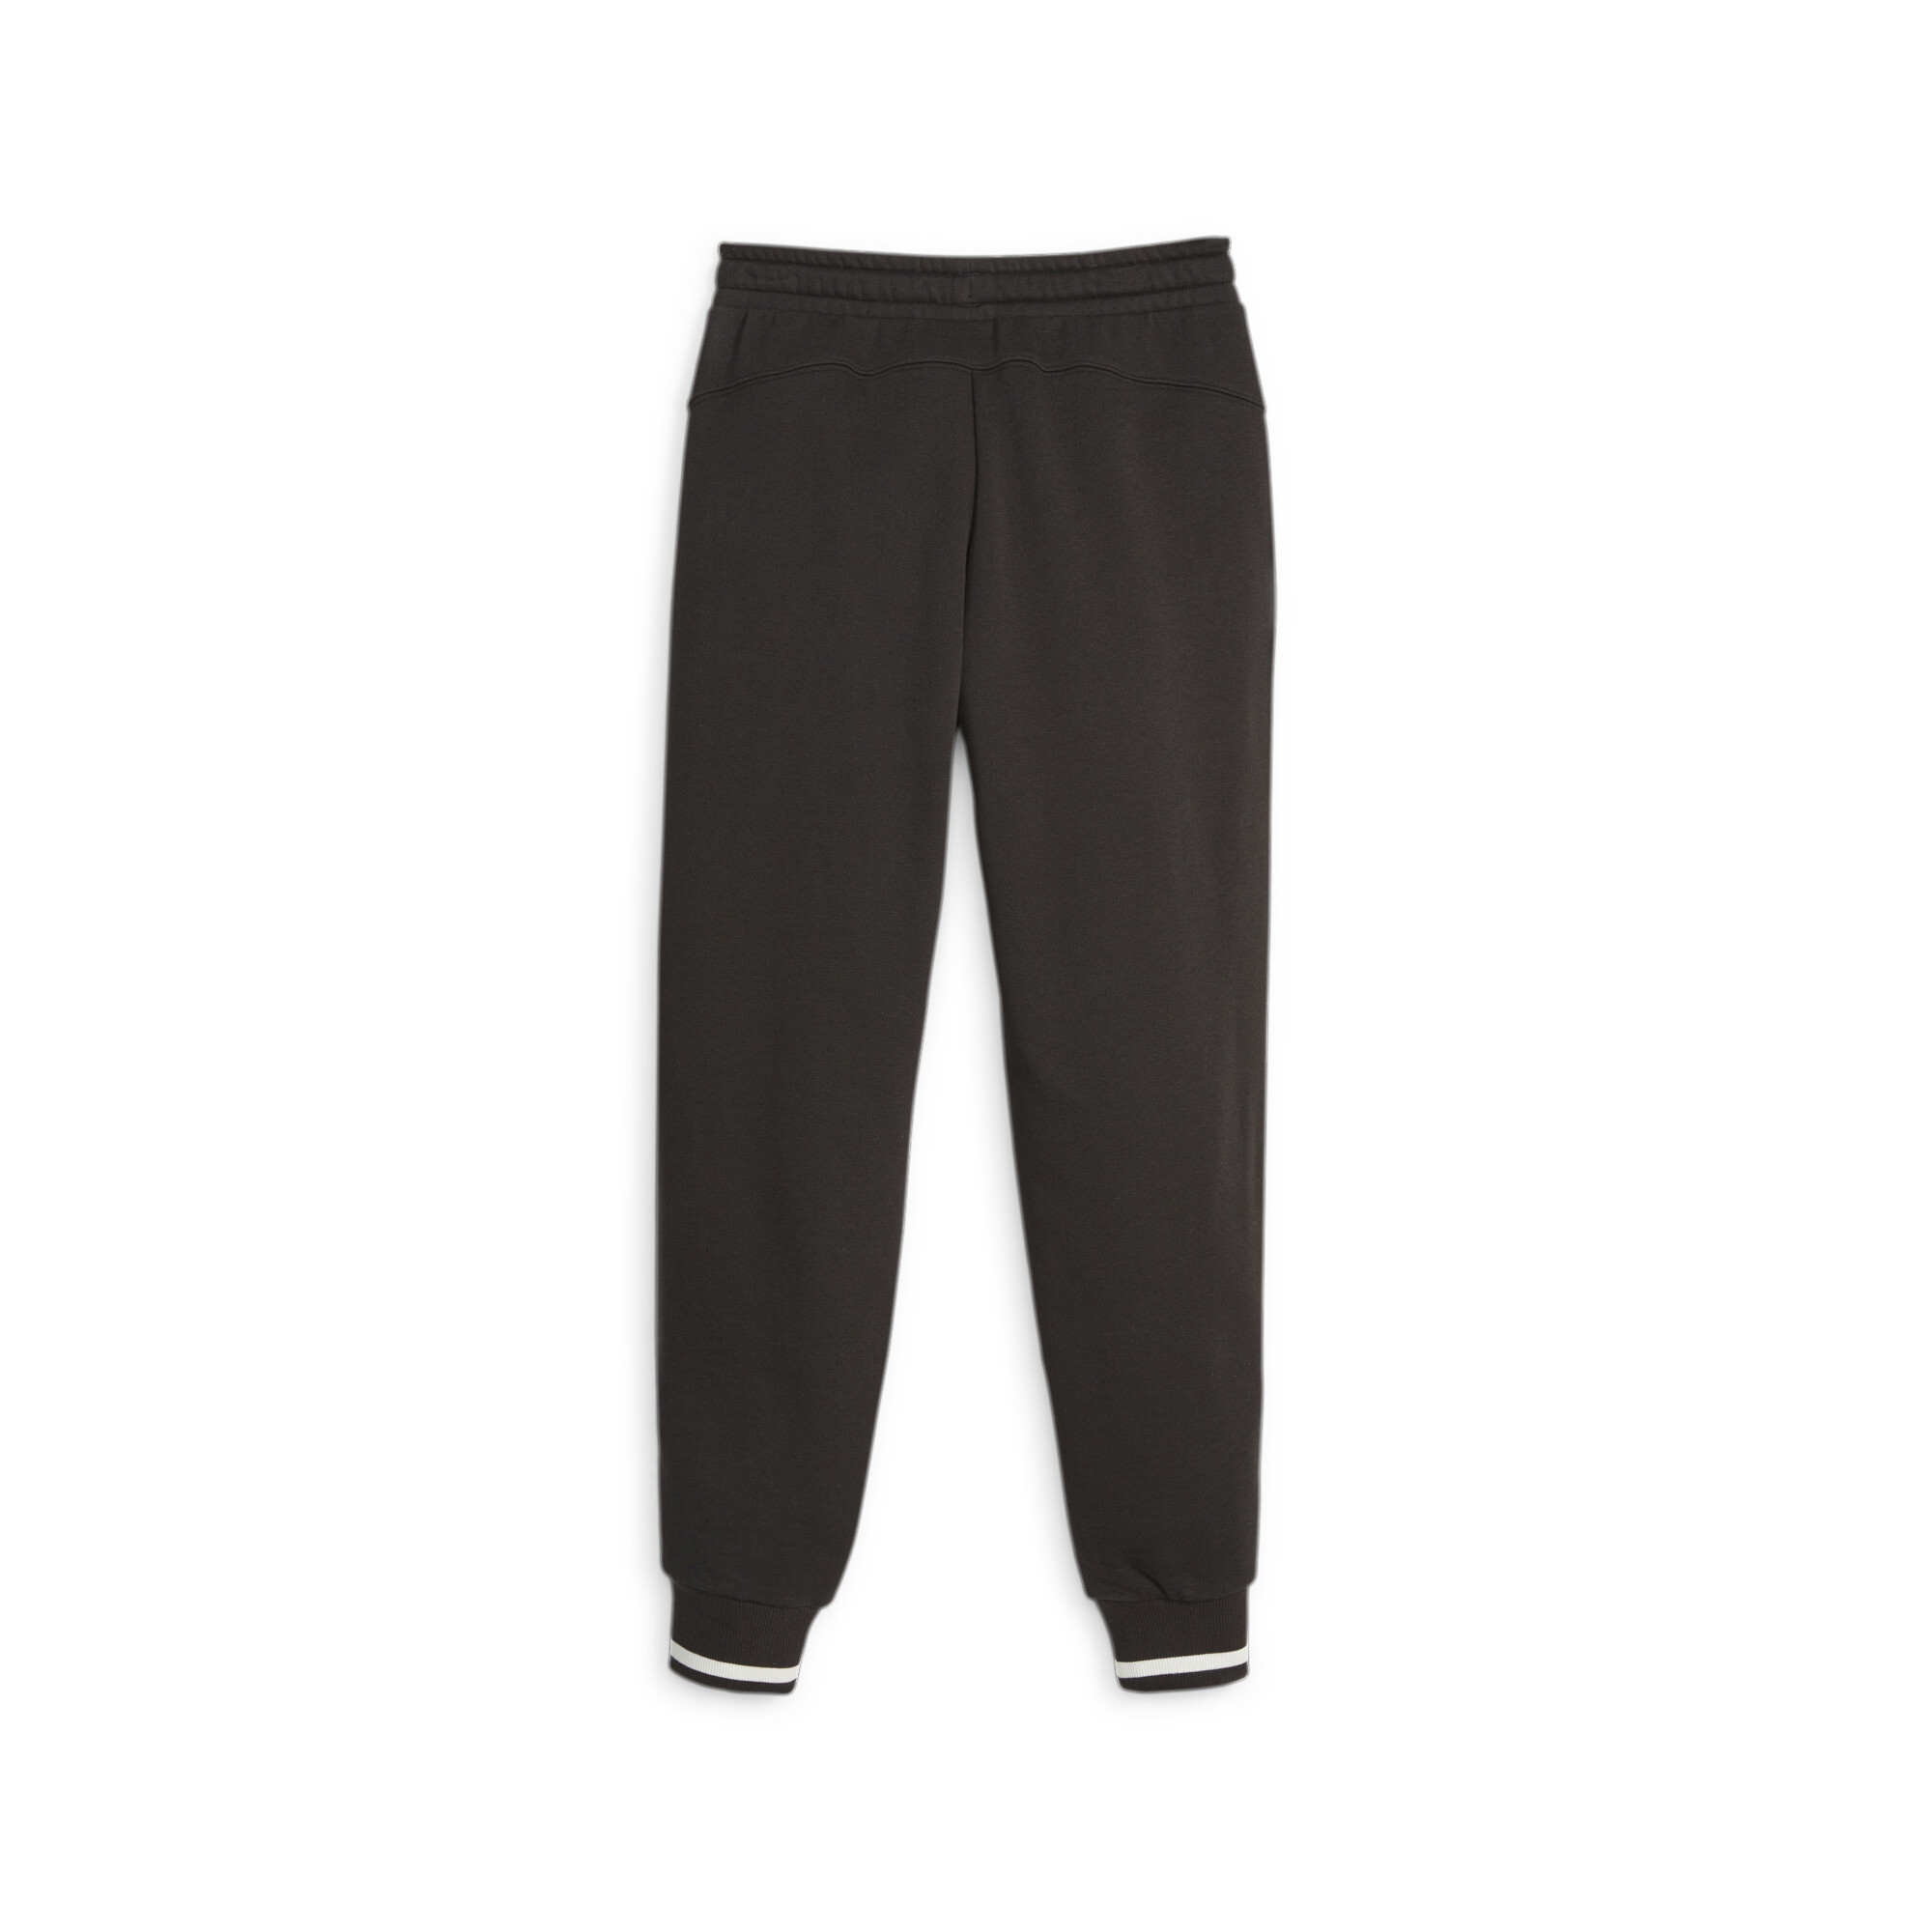 PUMA SQUAD Fleece Sweatpants In Black, Size 7-8 Youth